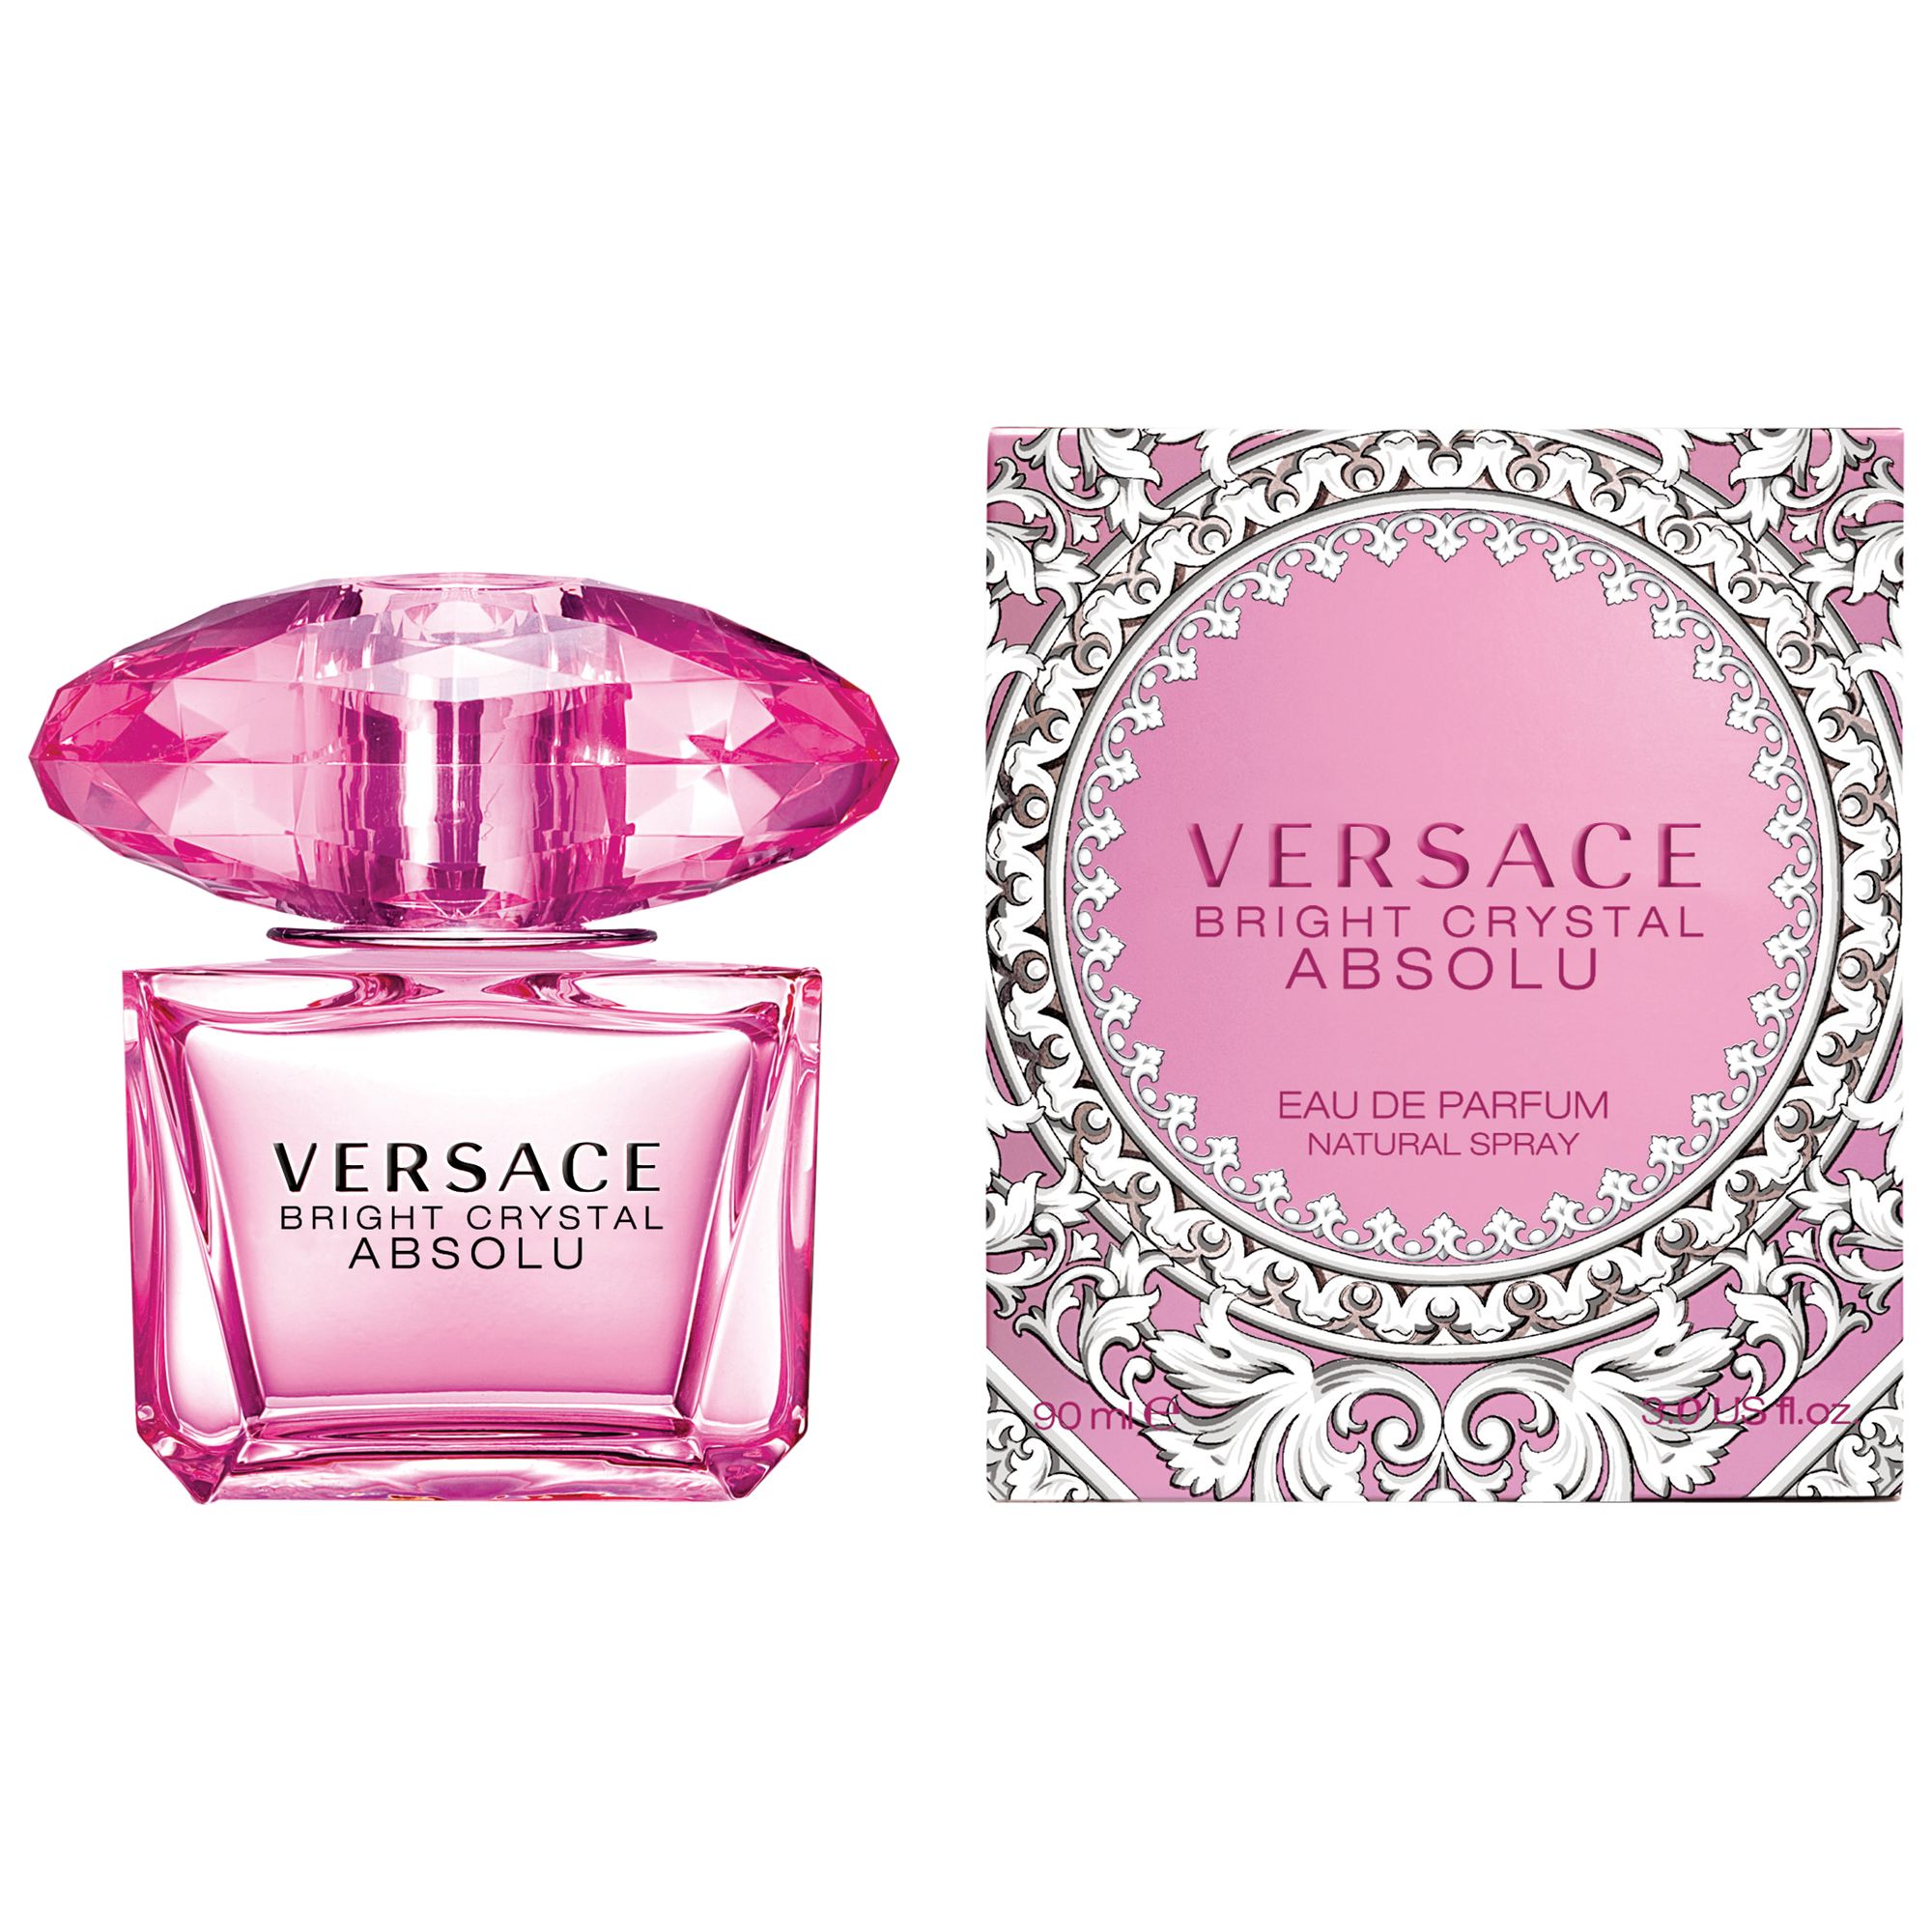 Versace Bright Crystal Absolu Eau de Parfum, 90ml at John Lewis & Partners